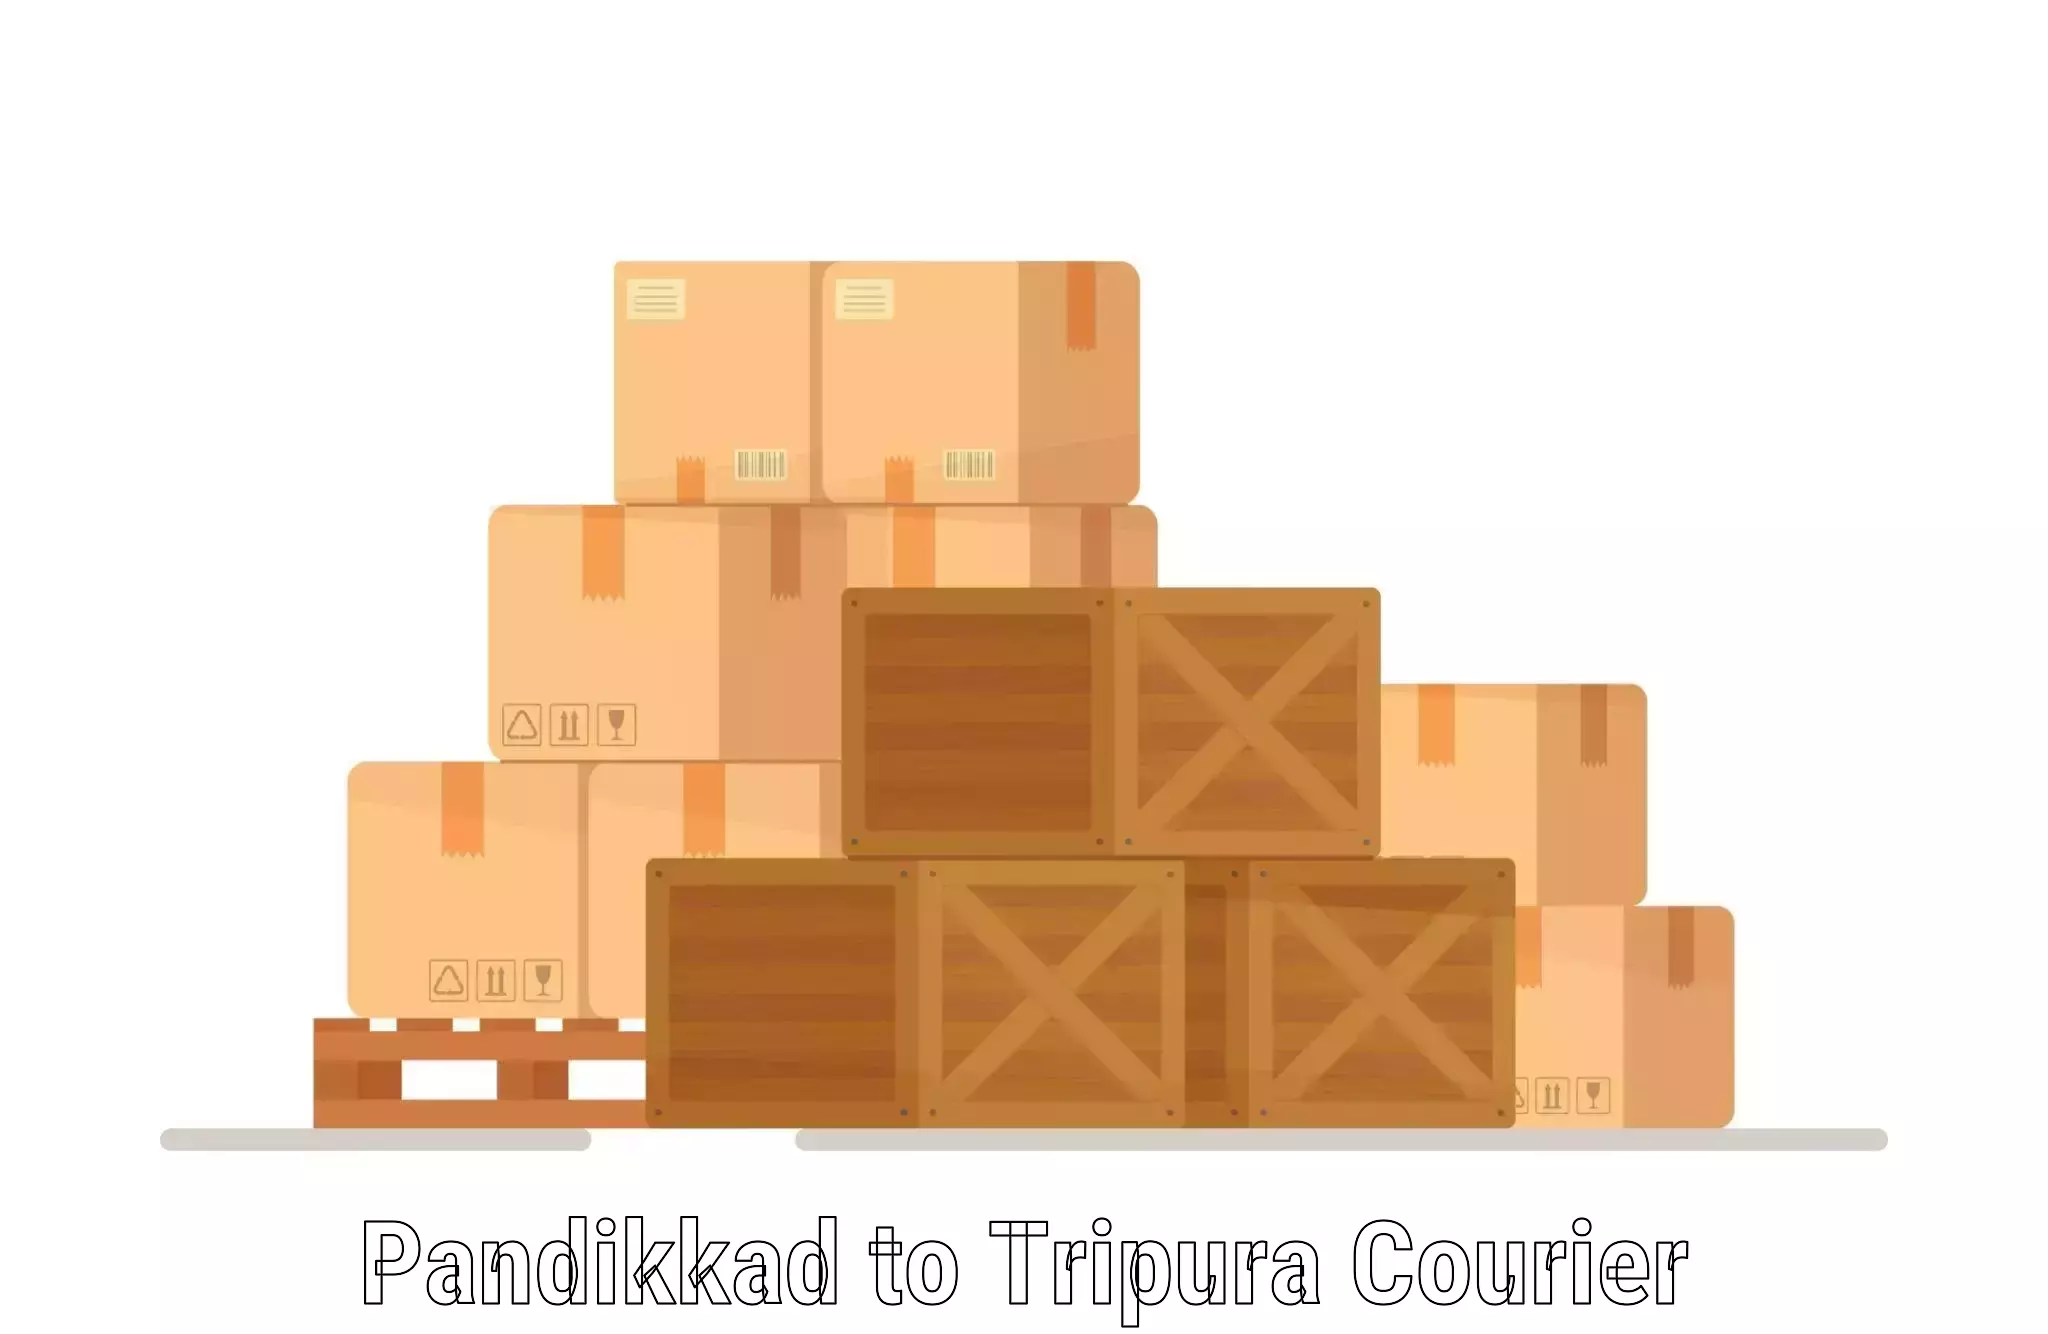 Enhanced shipping experience Pandikkad to West Tripura